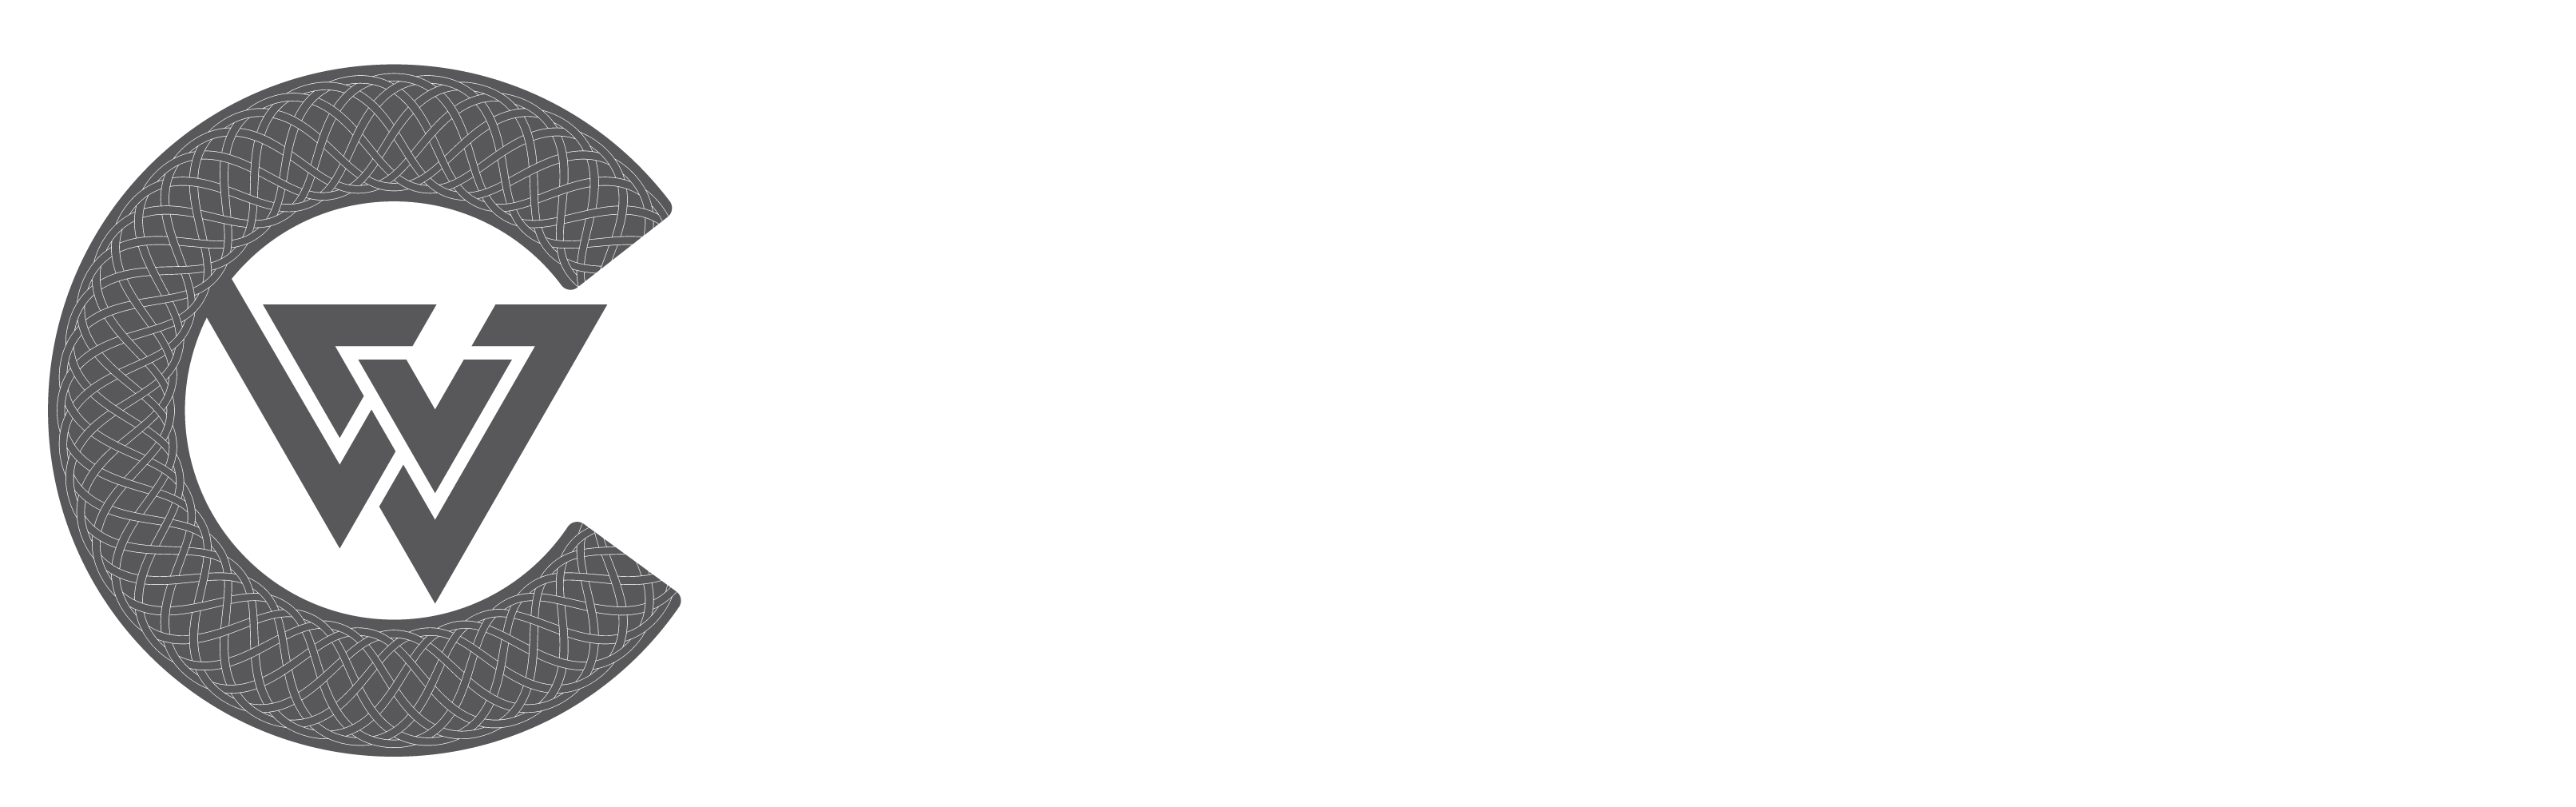 Viking Van Customs